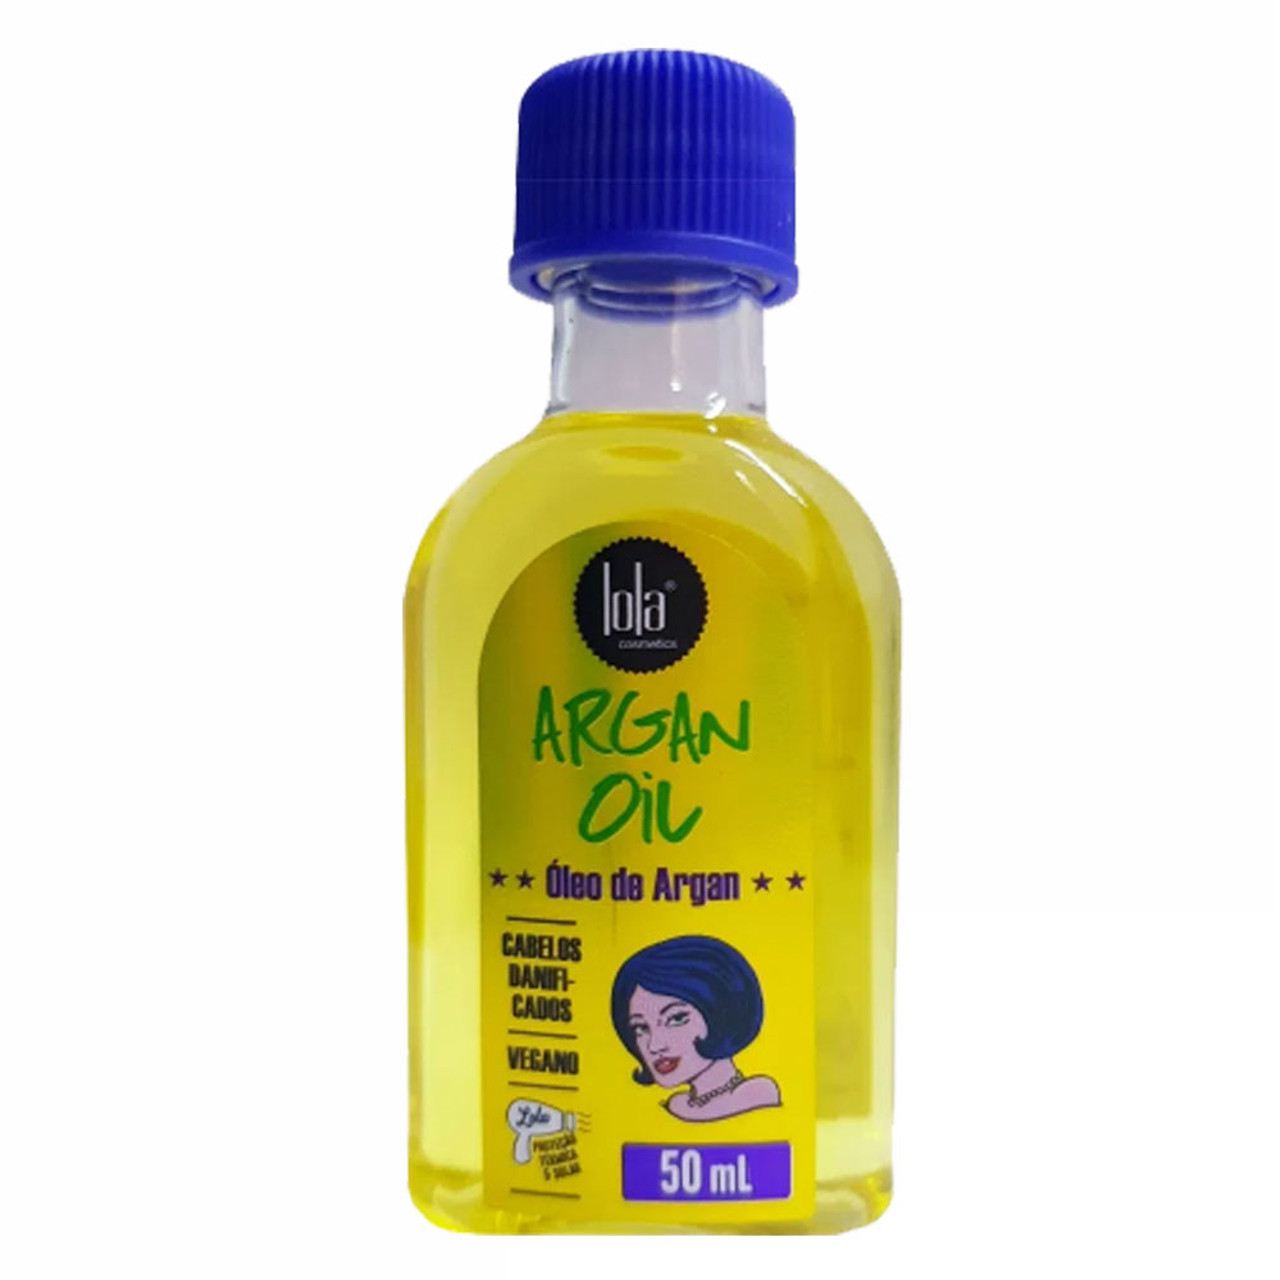 Lola Cosmetics Argan Oil Vegan Damaged Hair Óleo Argan Treatment Hair Care  50ml/1.69fl.oz